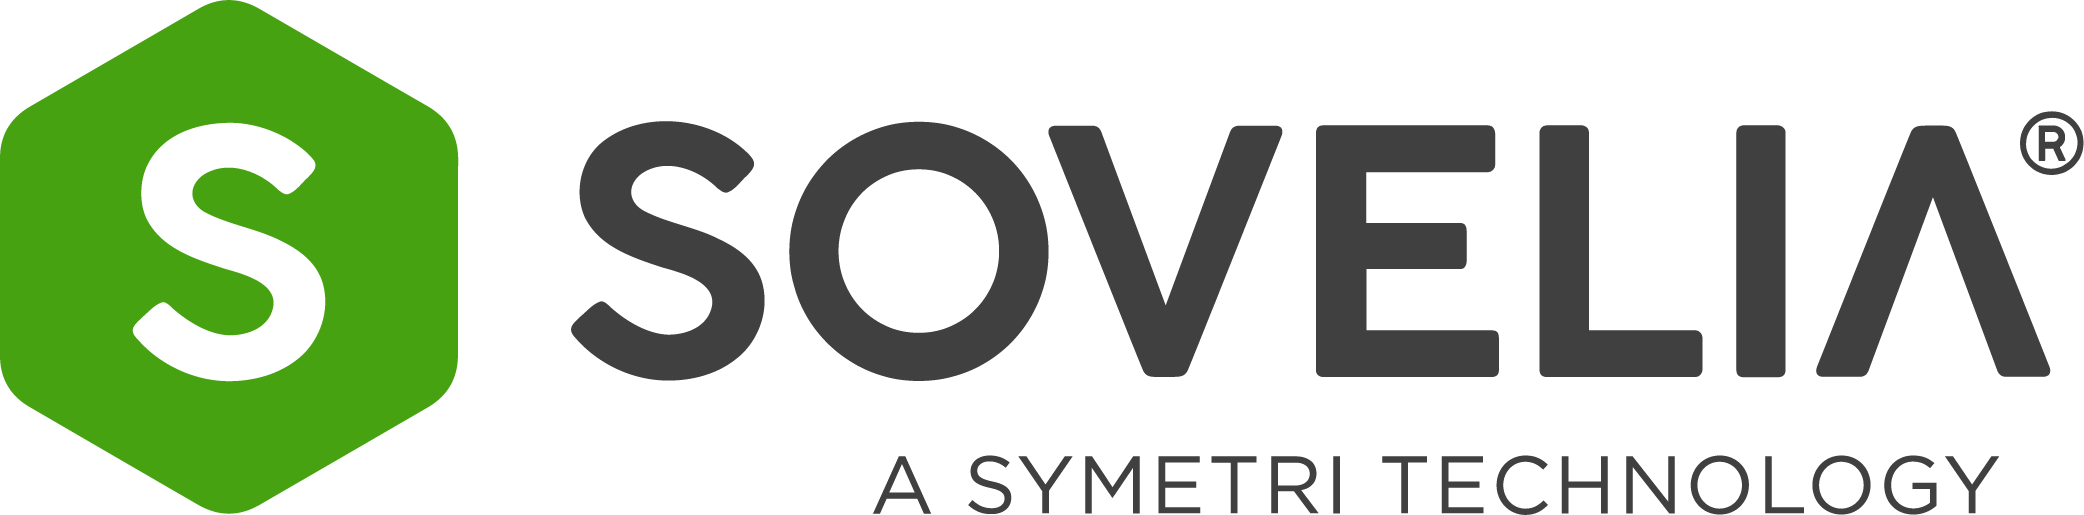 Sovelia solutions by Symetri